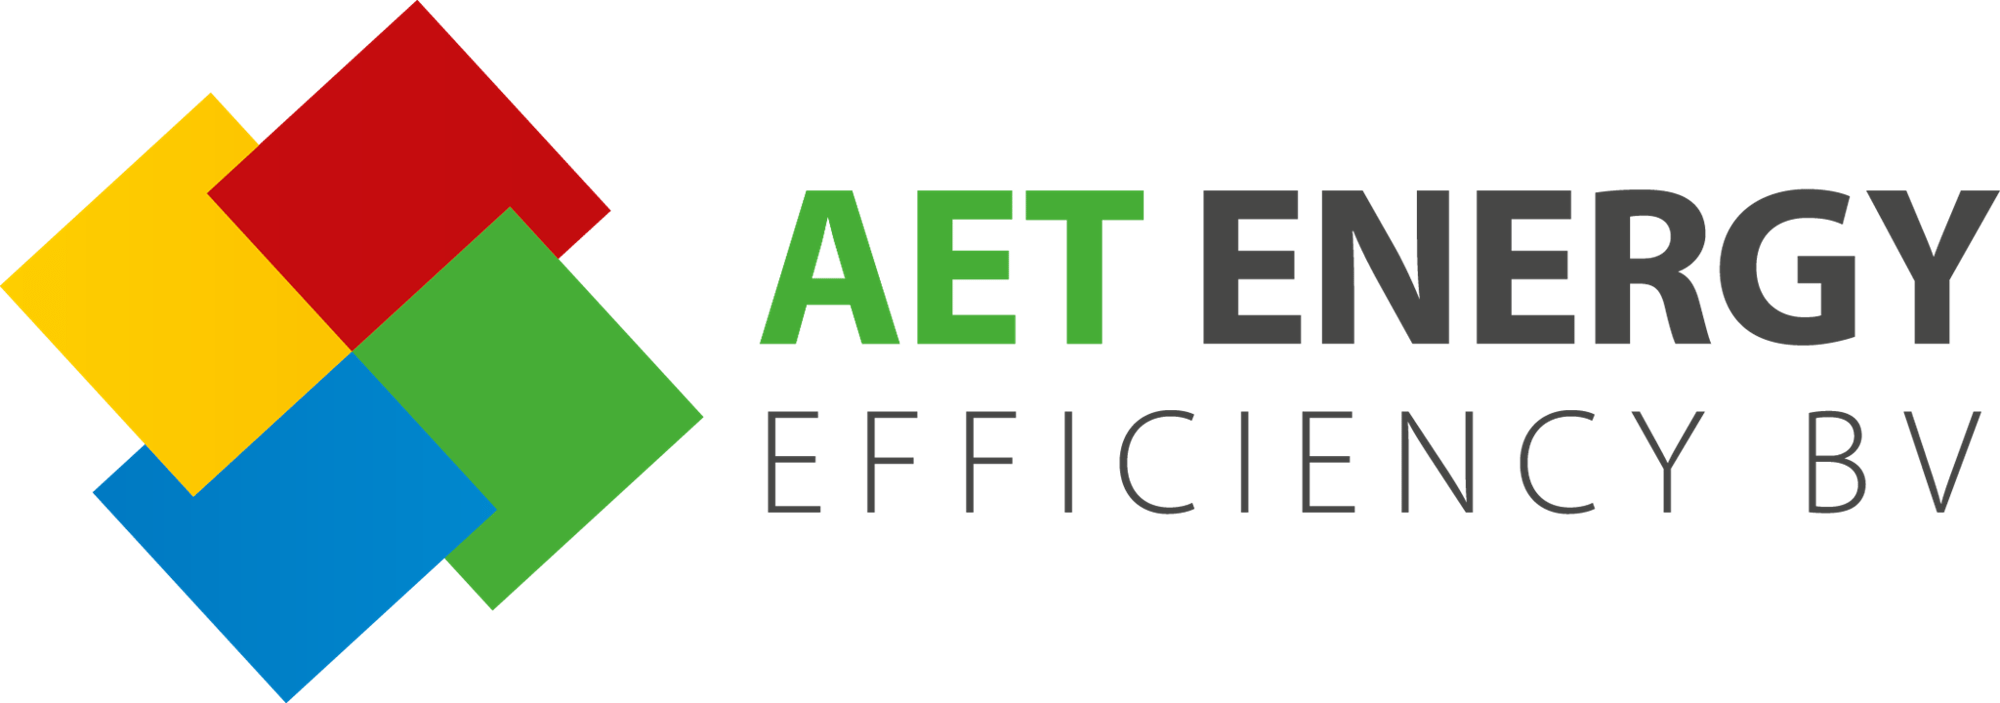 Incontrol-klant-AET-Energy-logo-png